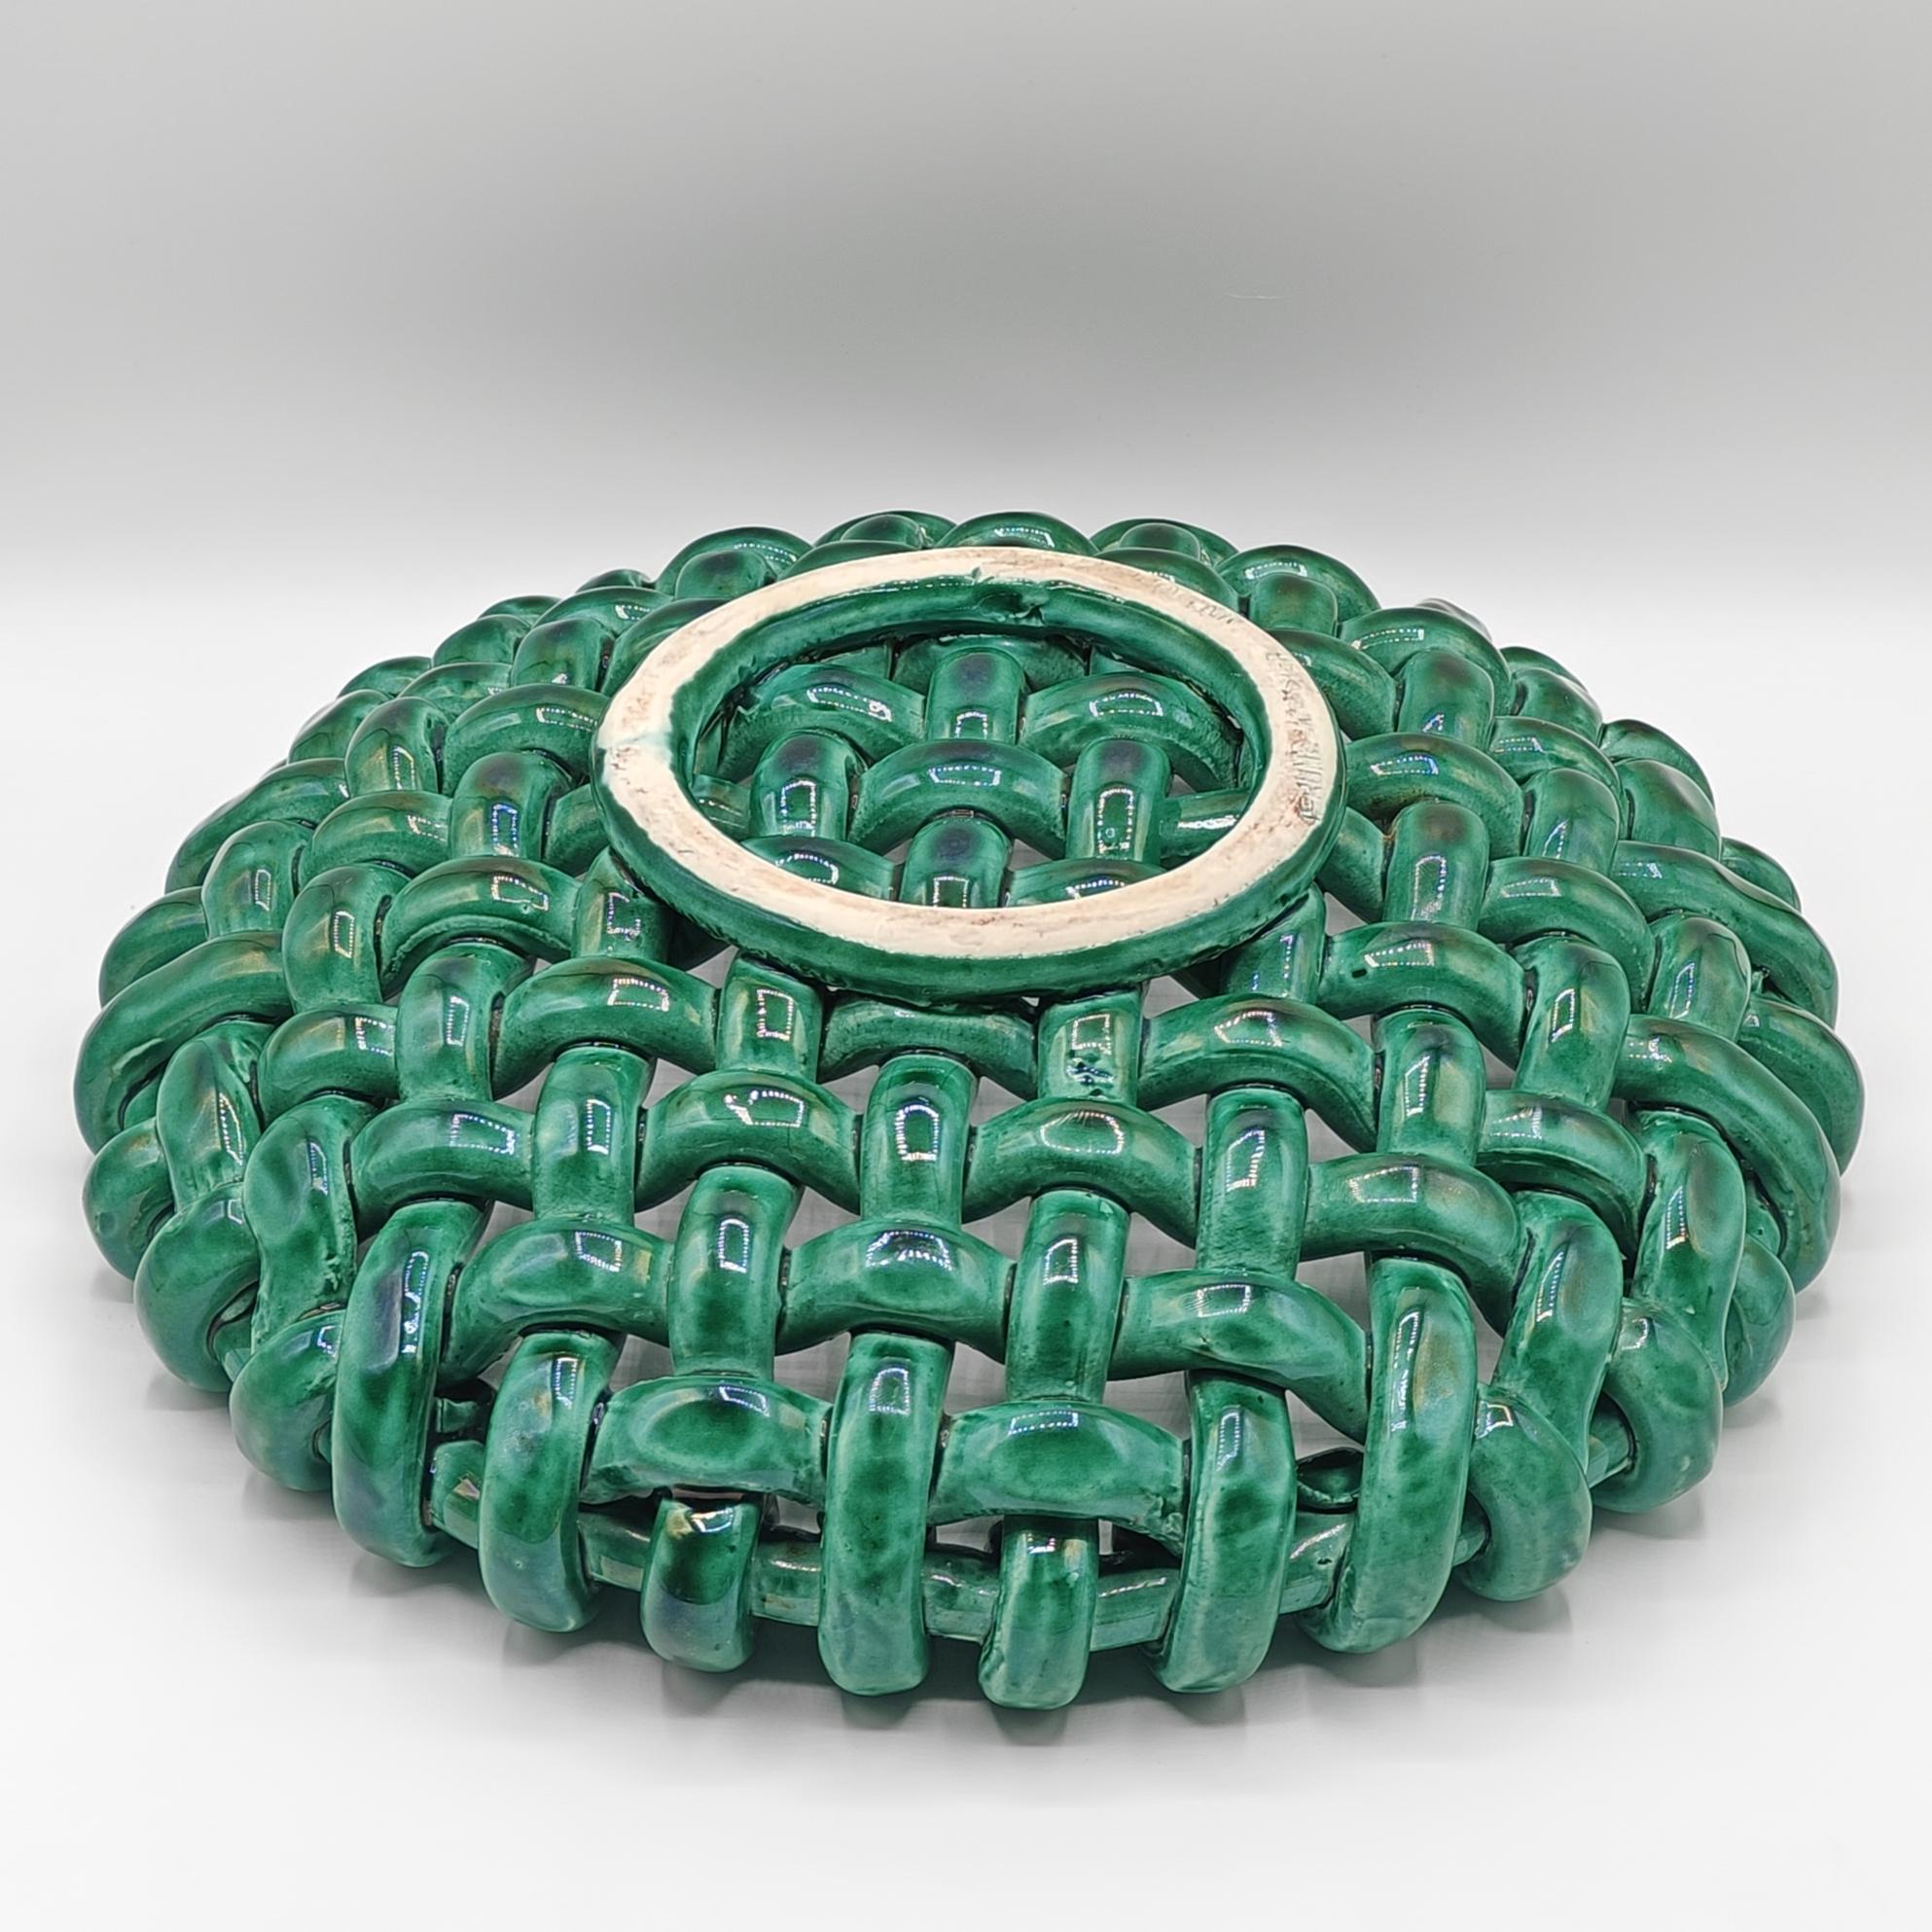 Enameled Green ceramic bowl by Jerome Massier 